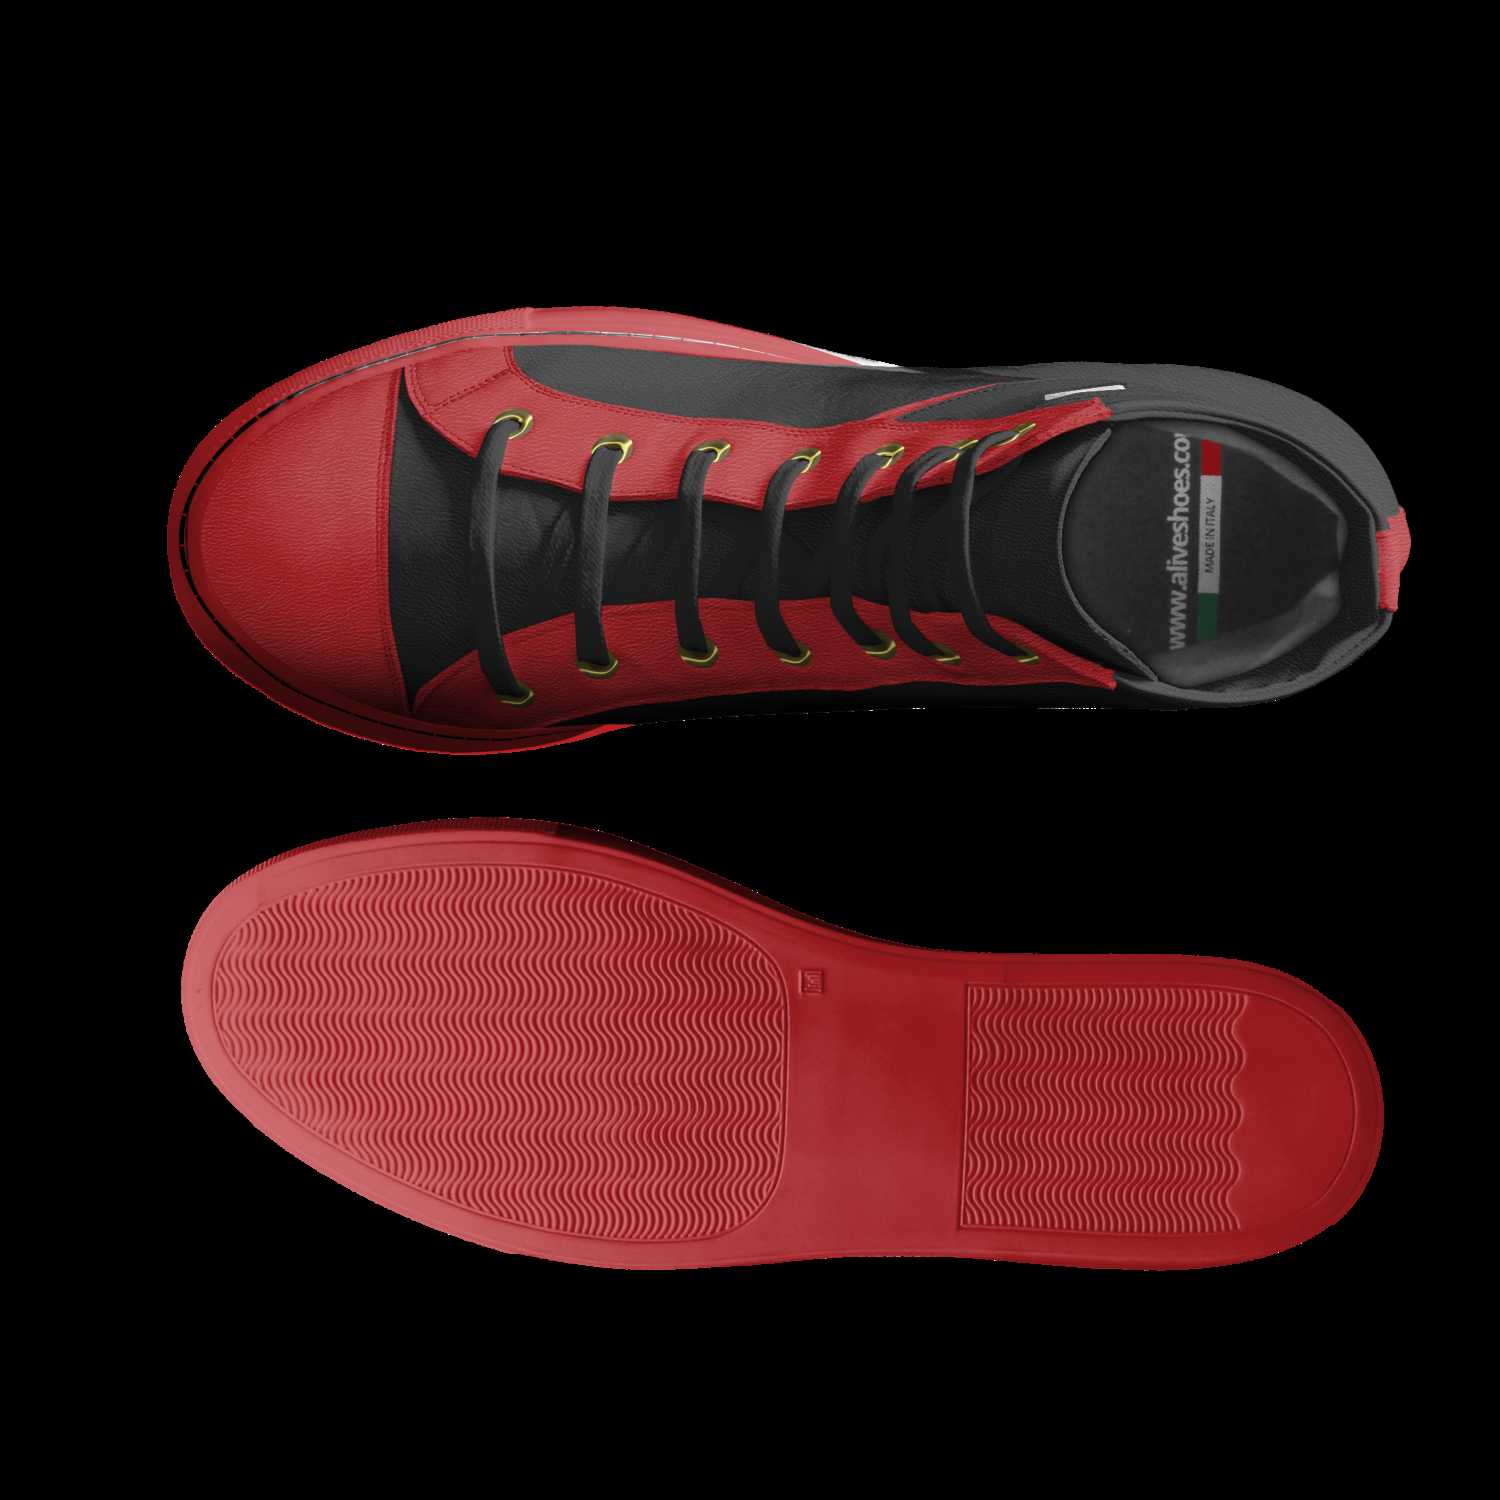 300000000000000000 | A Custom Shoe concept by Richard